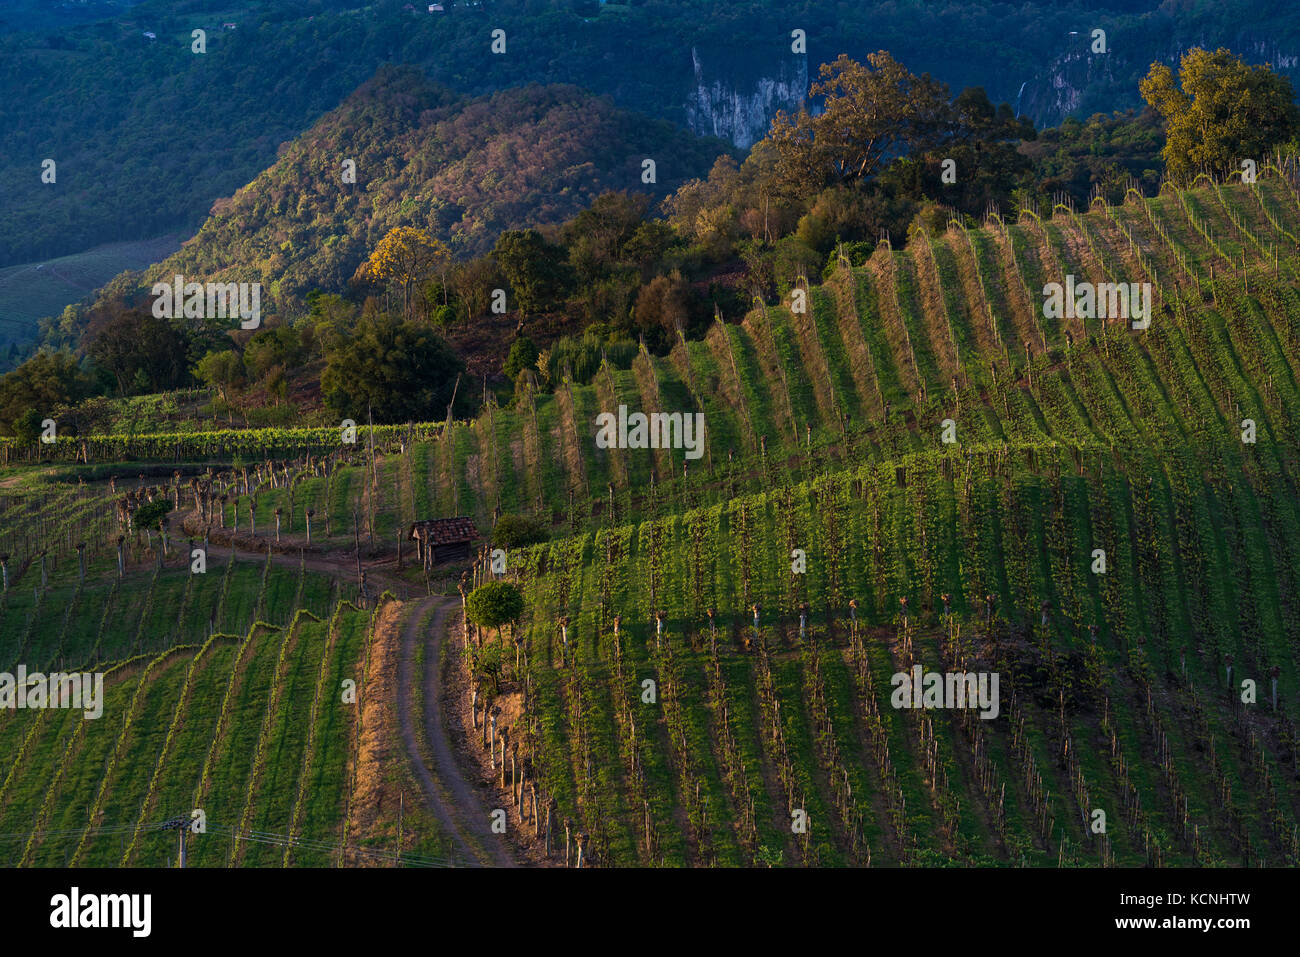 vineyards of Vale dos Vinhedos, Grande do Sul, Brazil Stock Photo